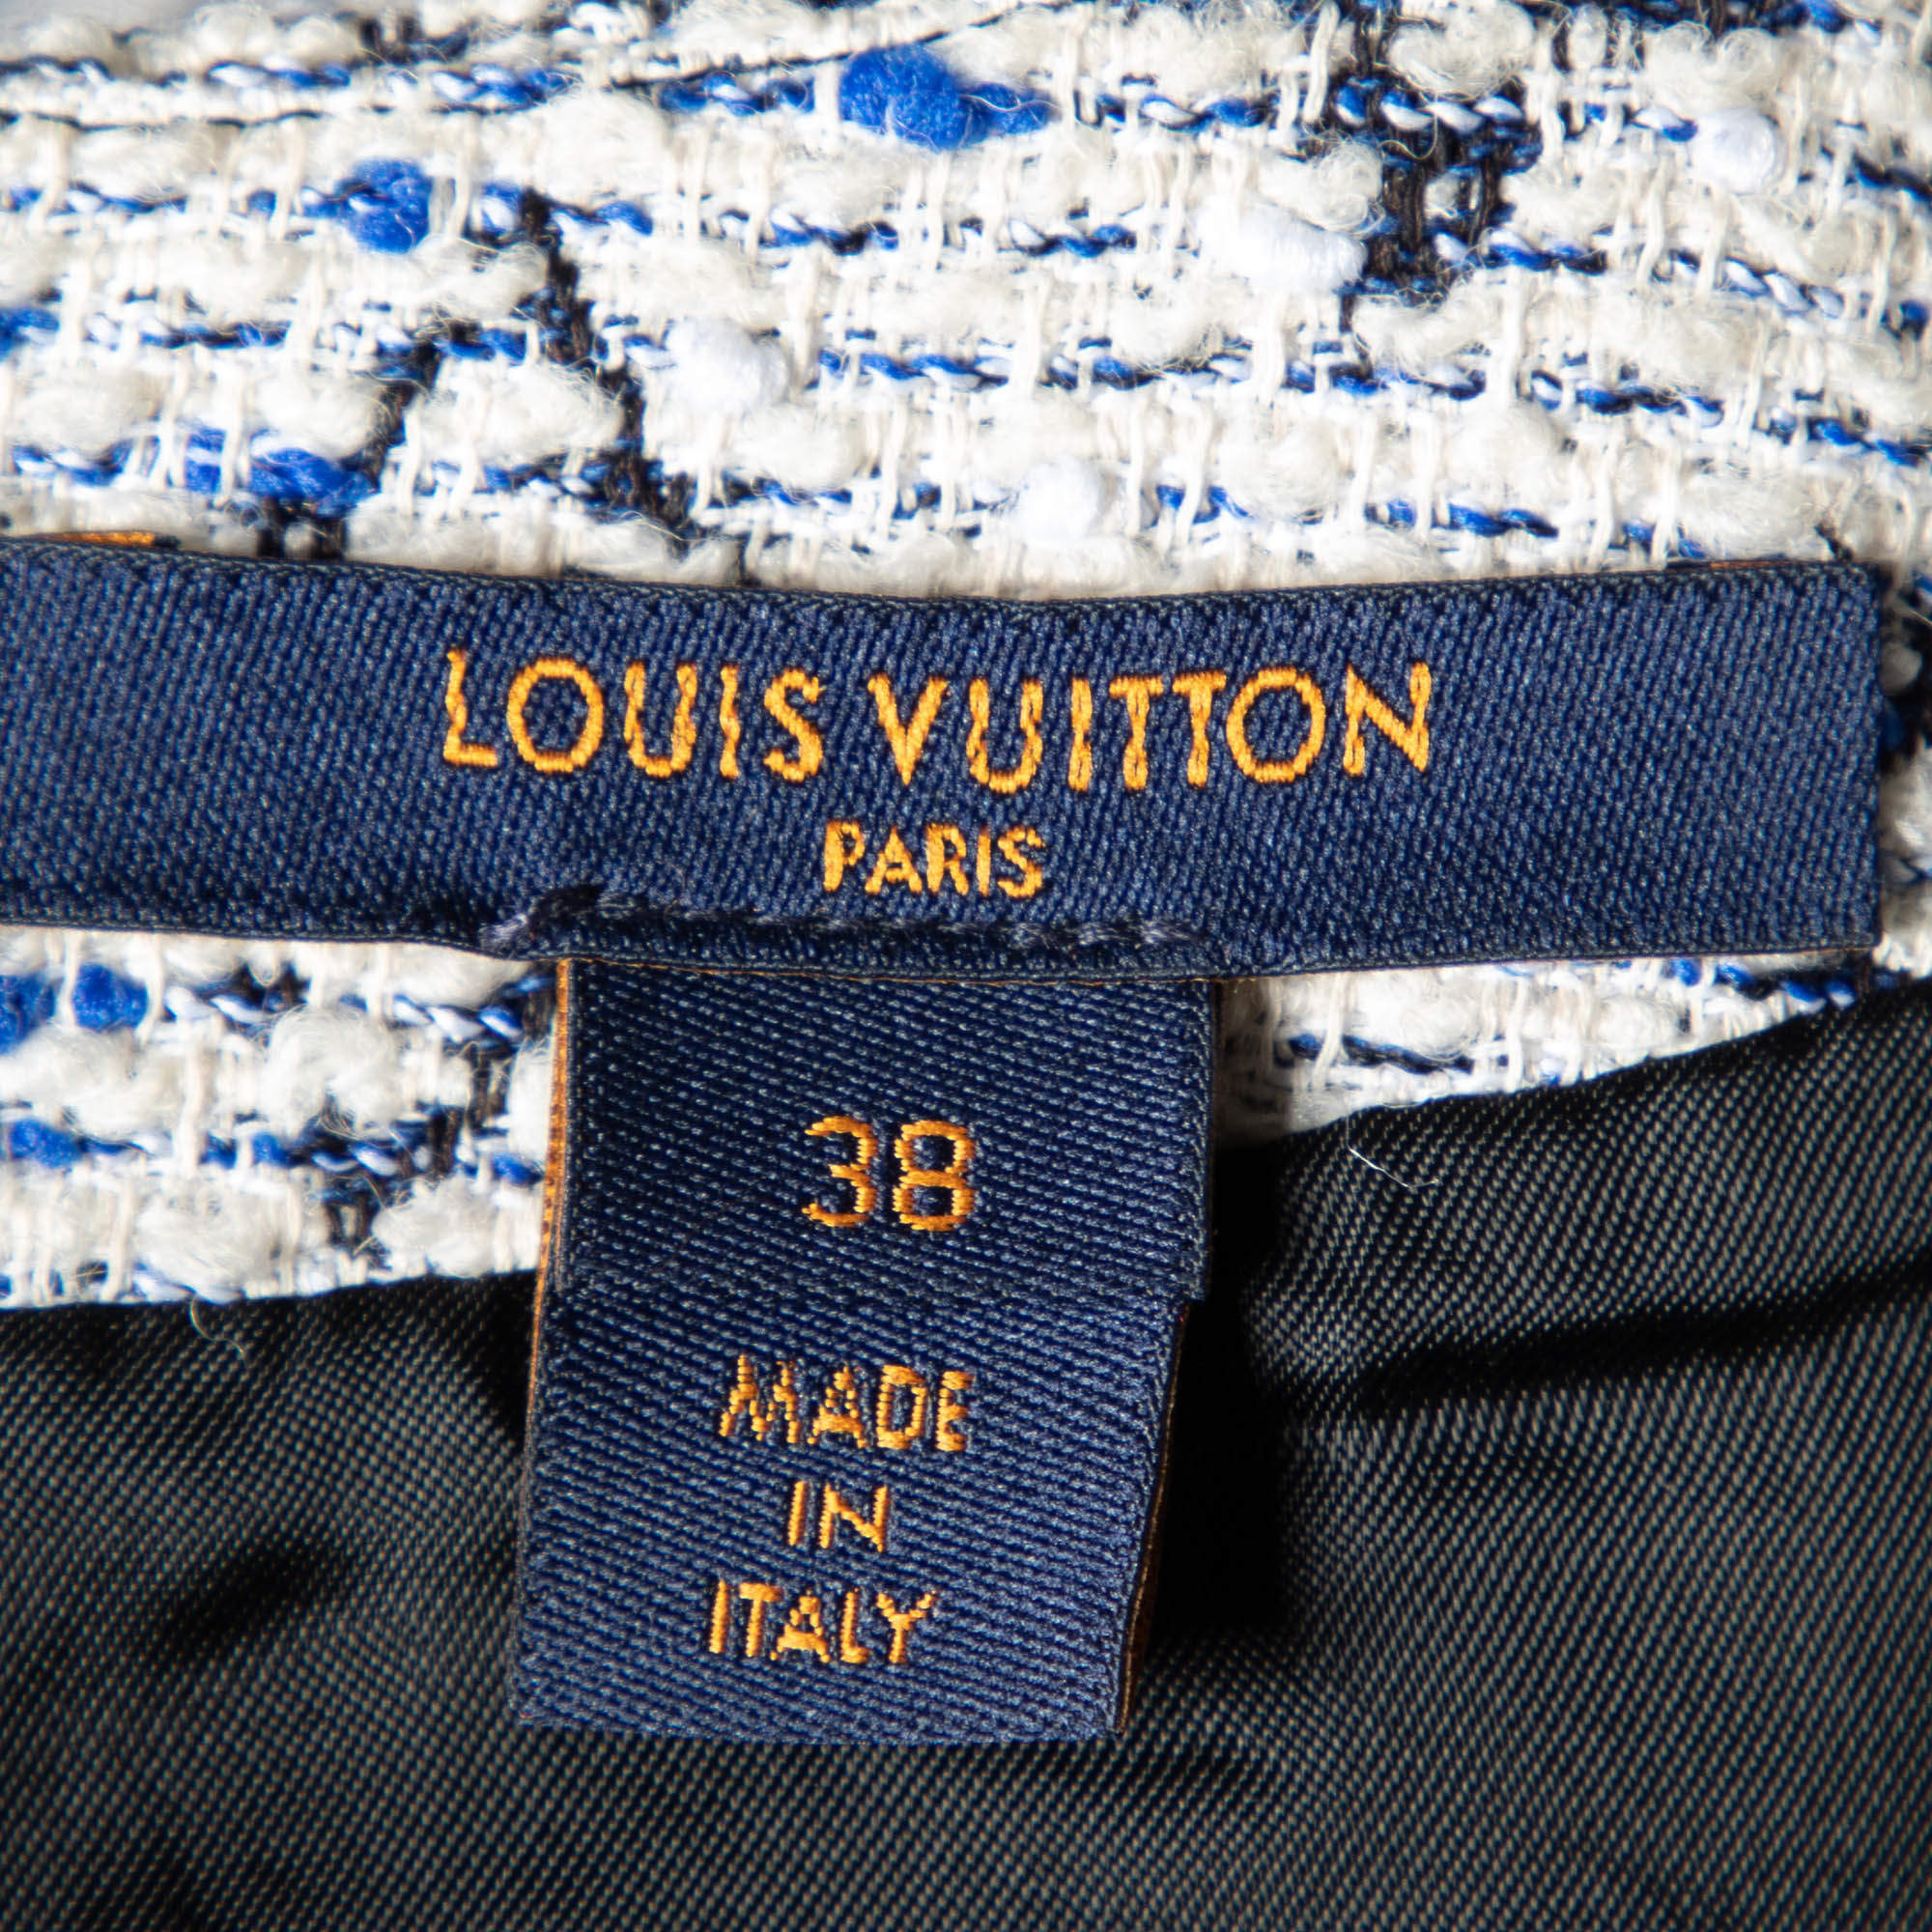 Louis Vuitton White Monogram Tweed & Leather Trim Sheath Dress M